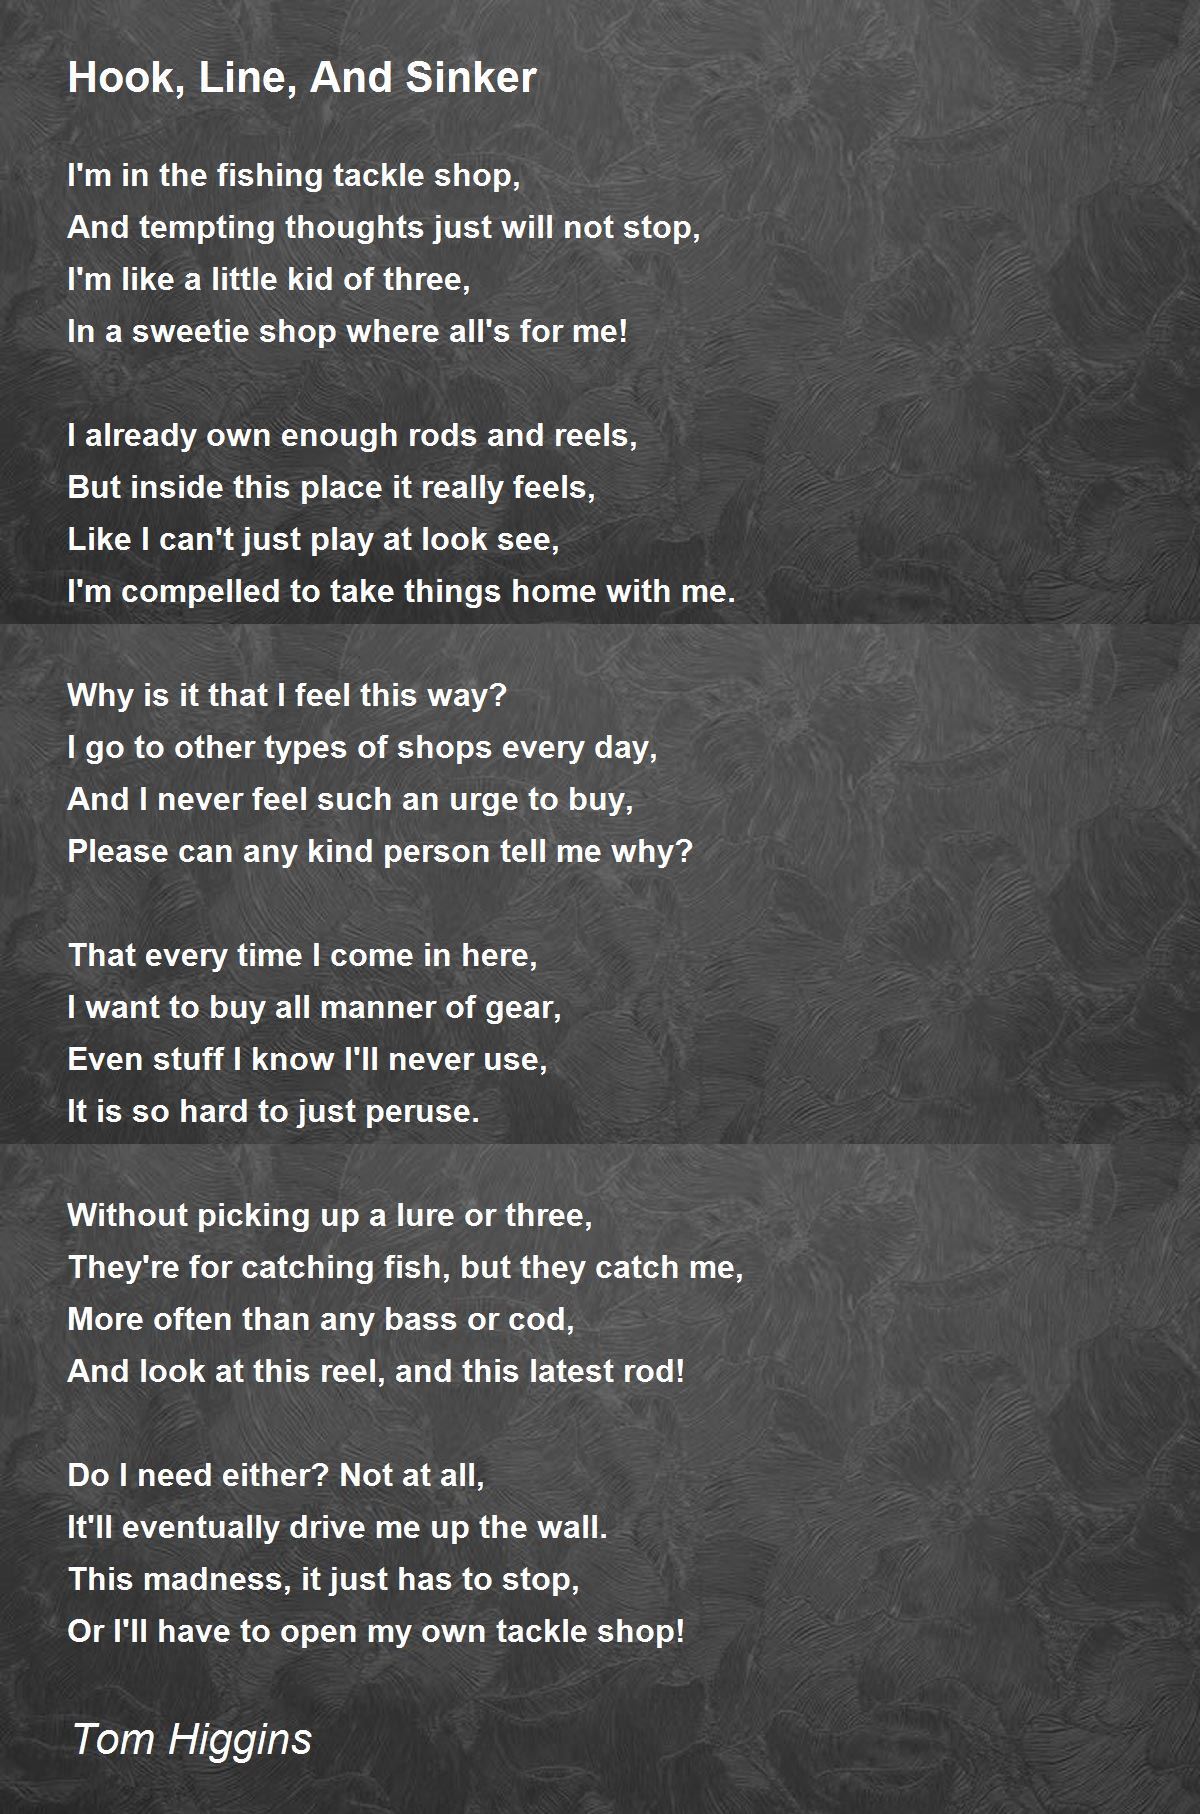 Hook, Line, And Sinker - Hook, Line, And Sinker Poem by Tom Higgins